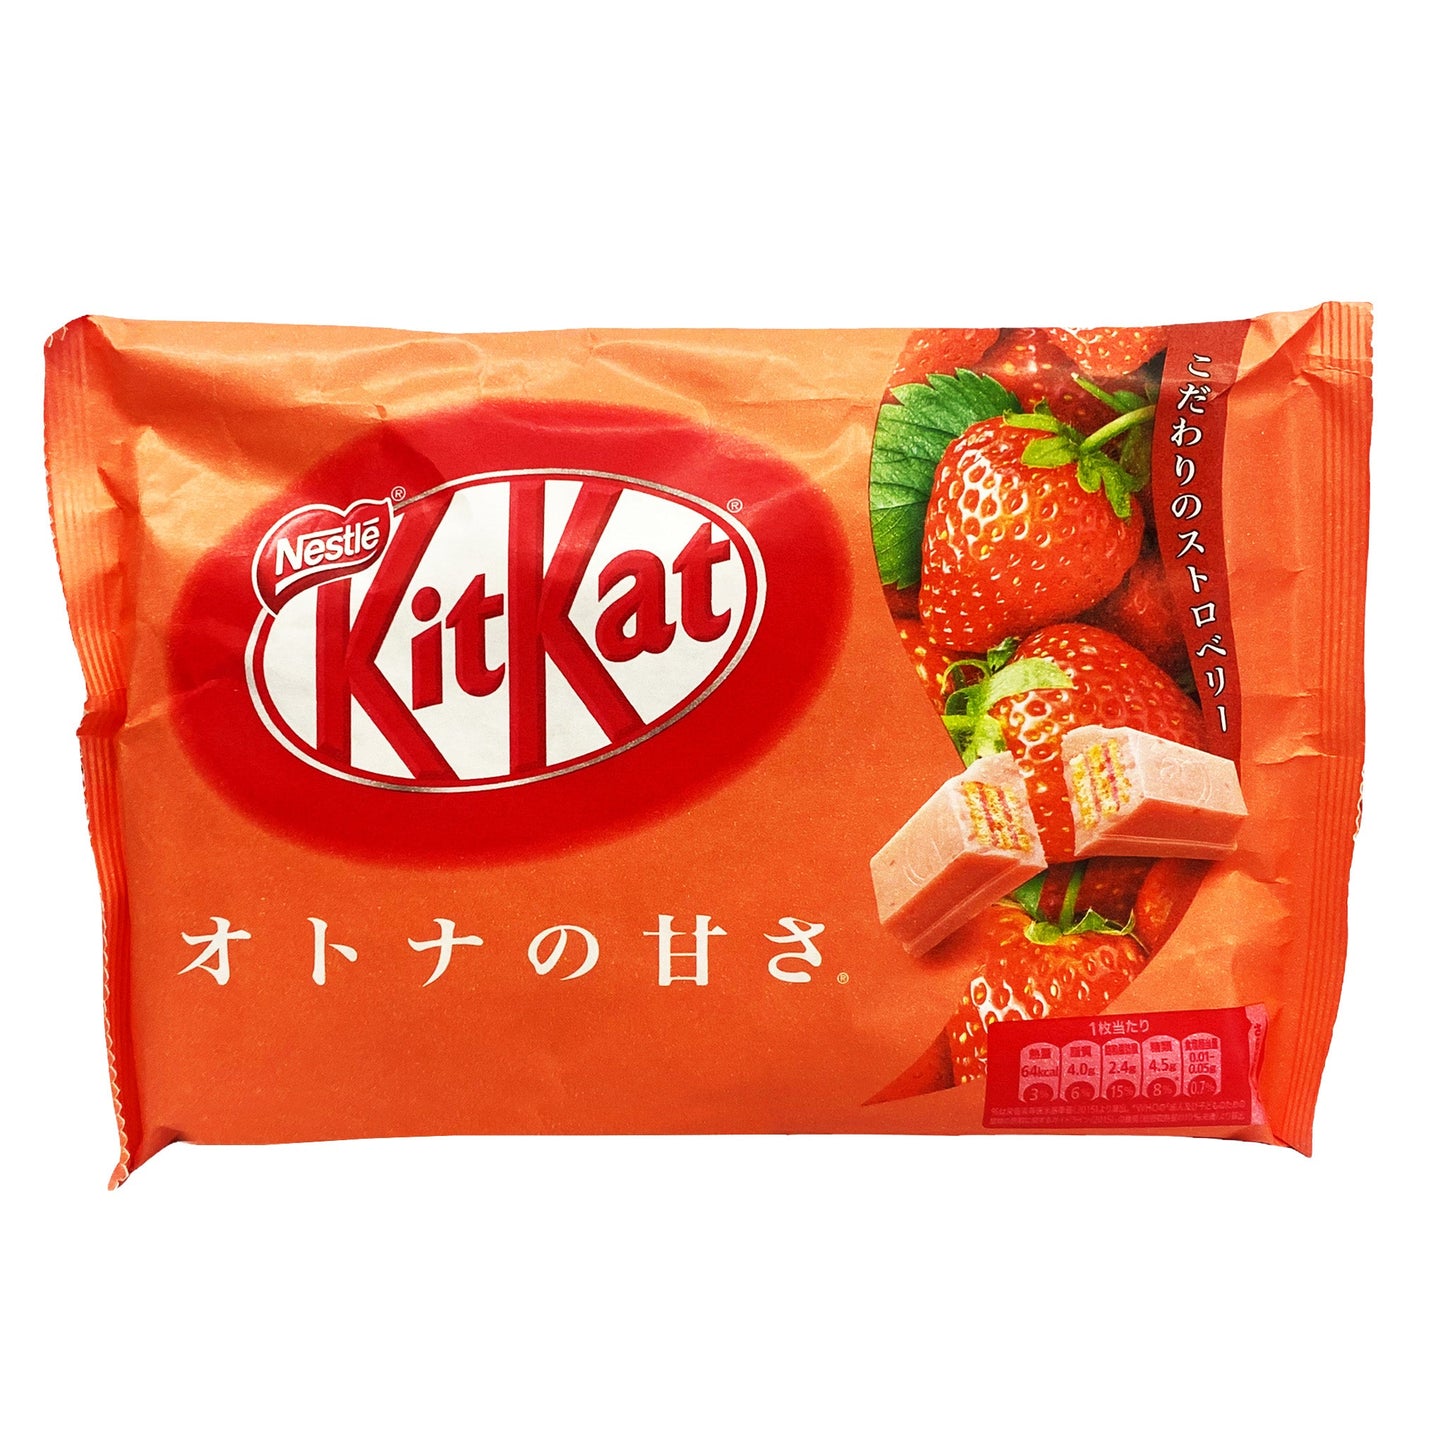 Nestle - Kit Kat - Strawberry (4.5 oz bag) - Product of Japan